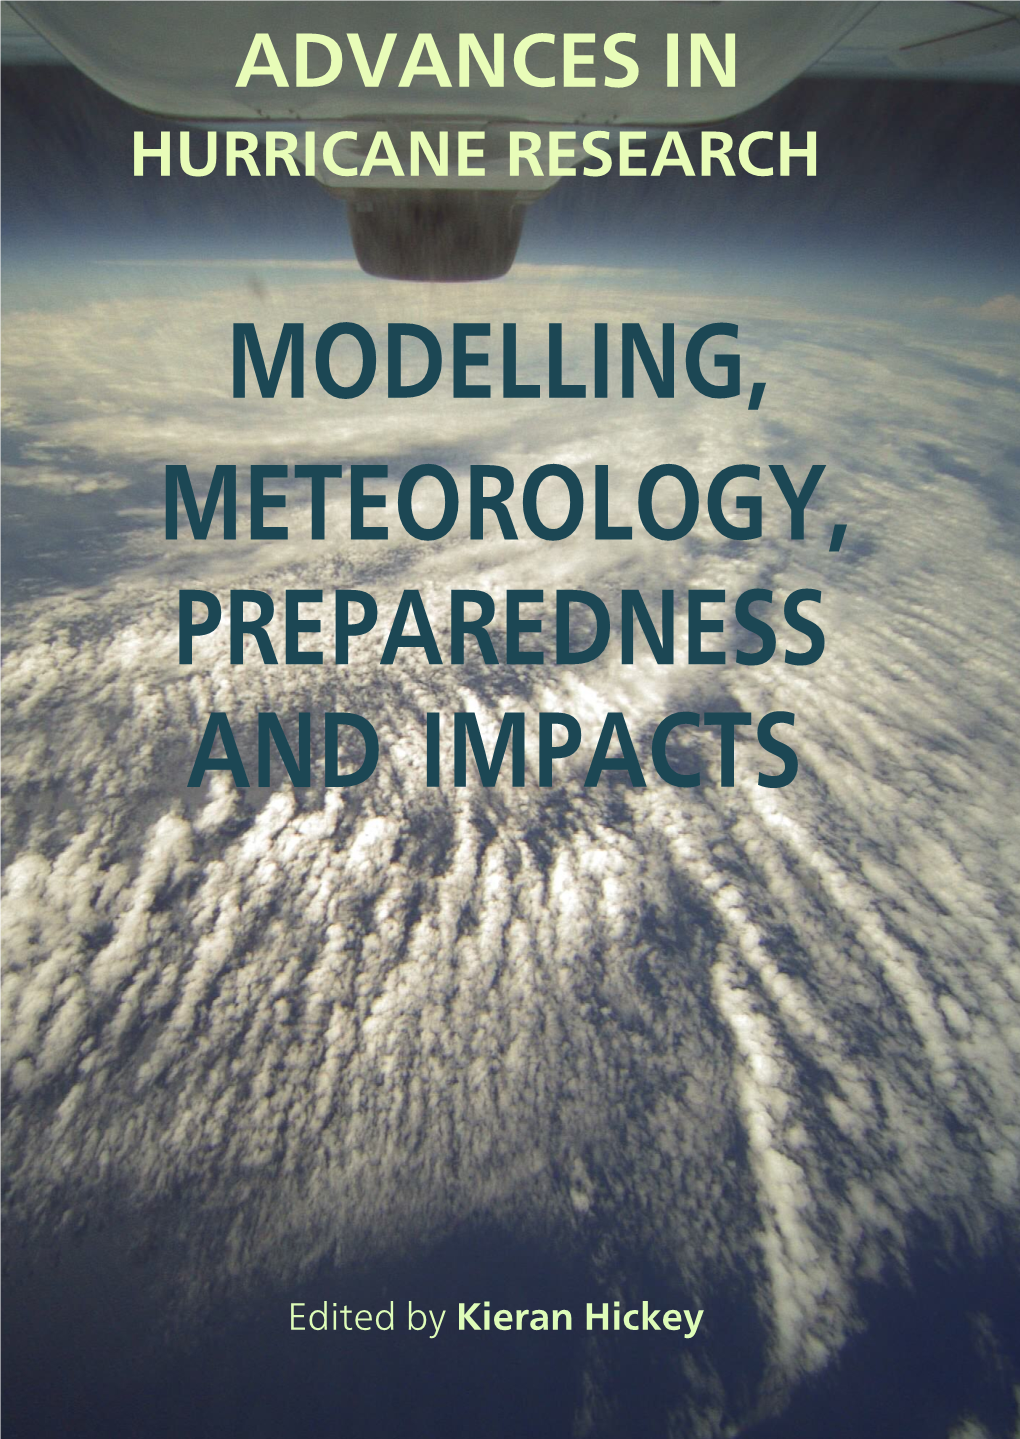 Modelling, Meteorology, Impacts Preparedness